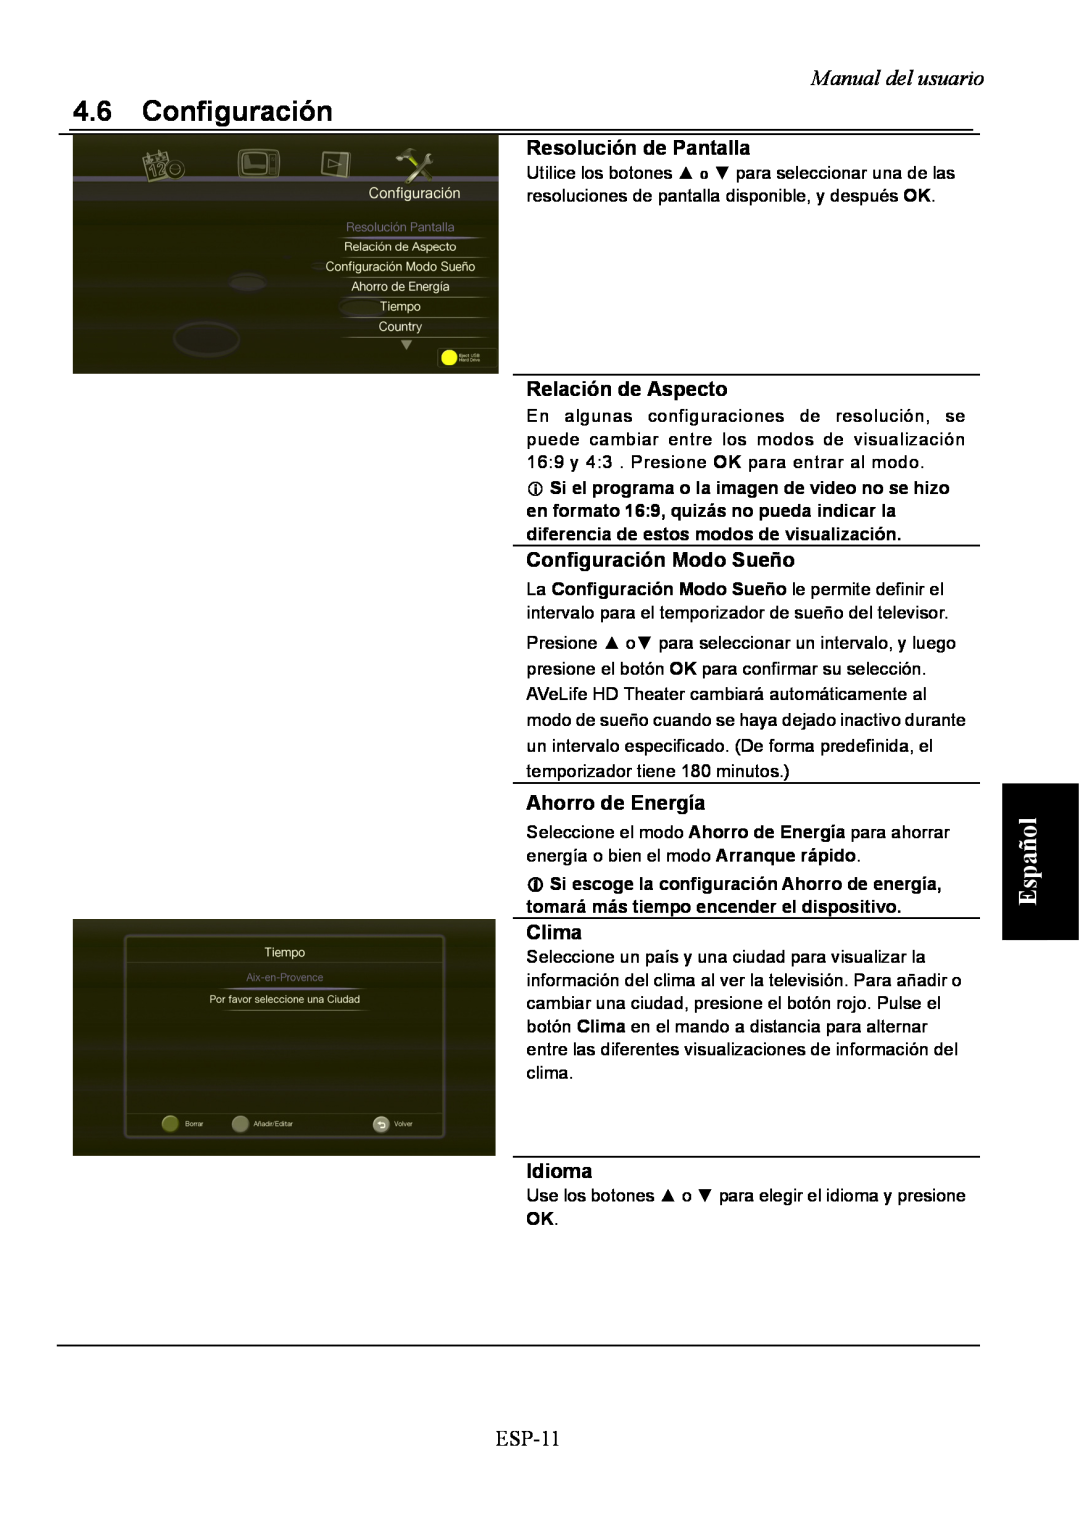 AVerMedia Technologies A211 Español, Manual del usuario, Resolución de Pantalla, Relación de Aspecto, Ahorro de Energía 